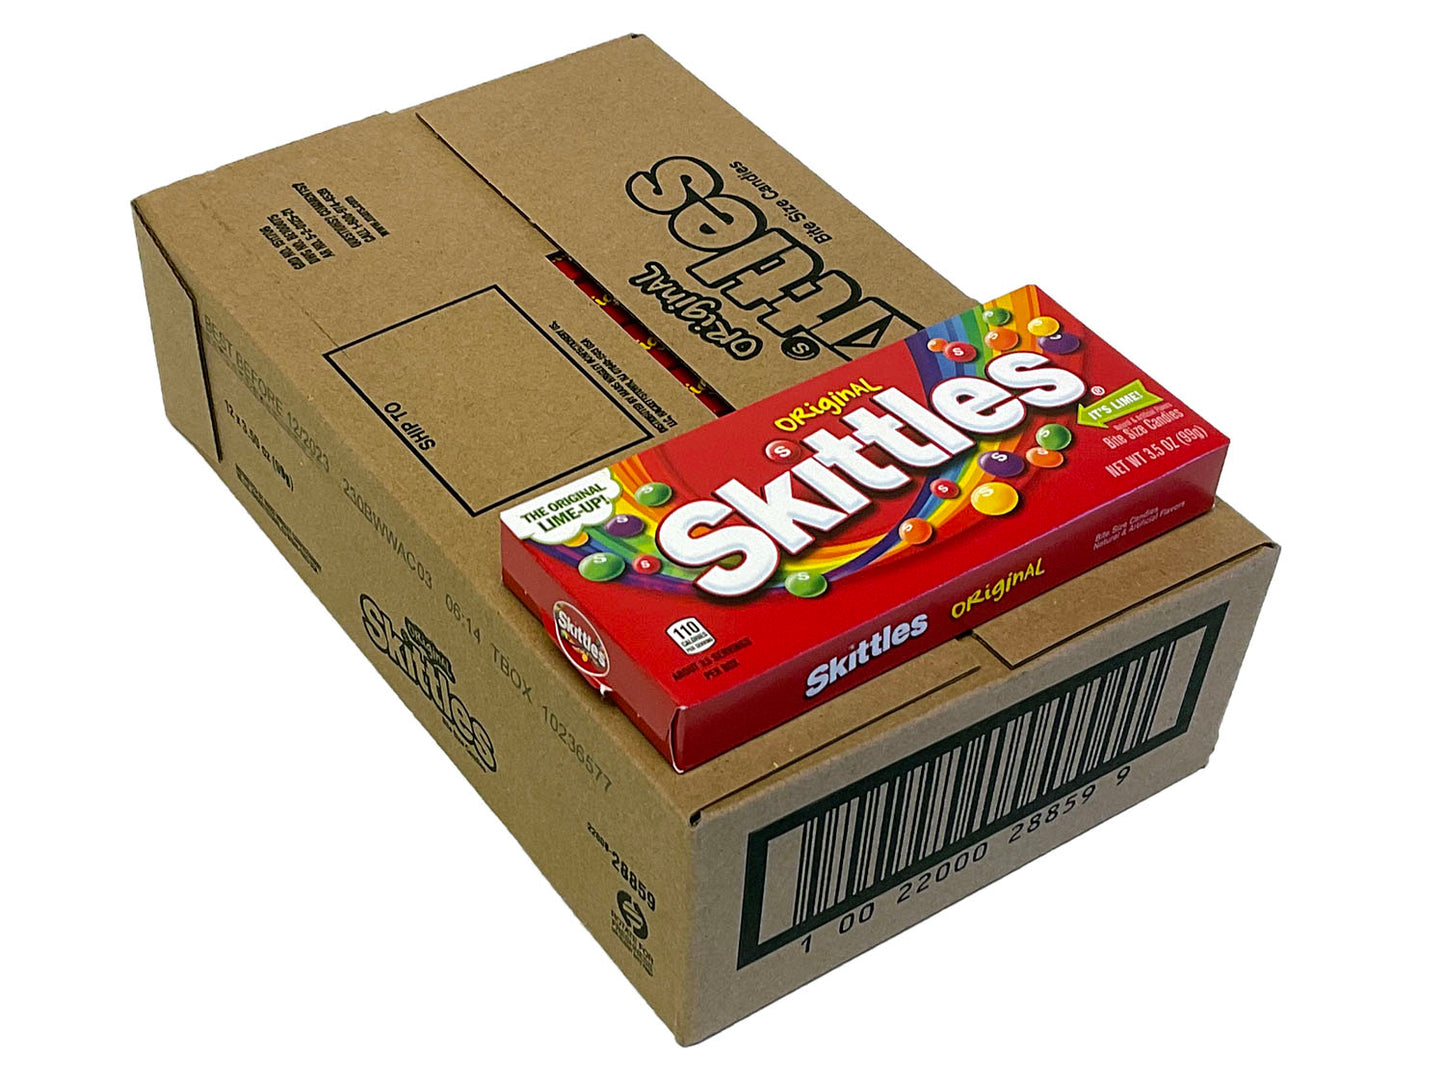 SKITTLES Original Fruity Candy Theater Box, 3.5 oz. Box